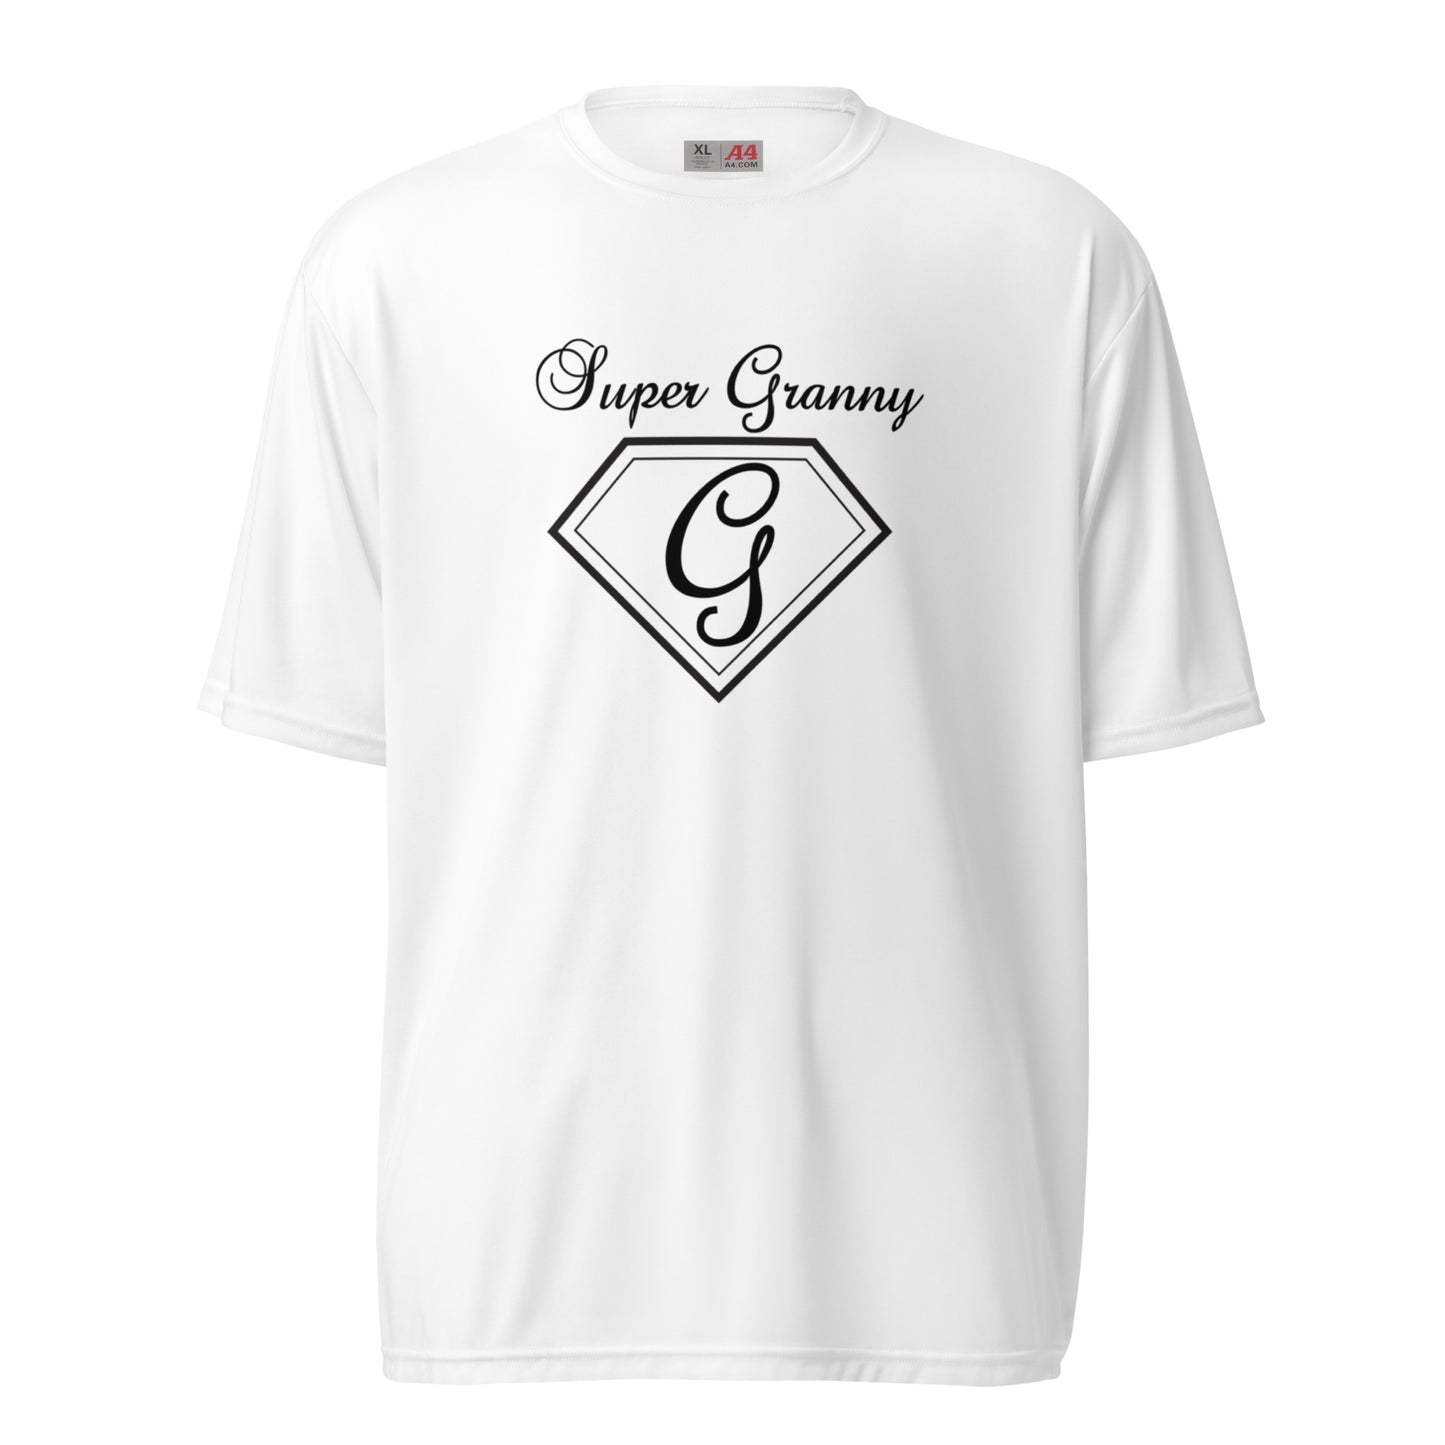 Super Granny unisex performance crew neck t-shirt - Black Print